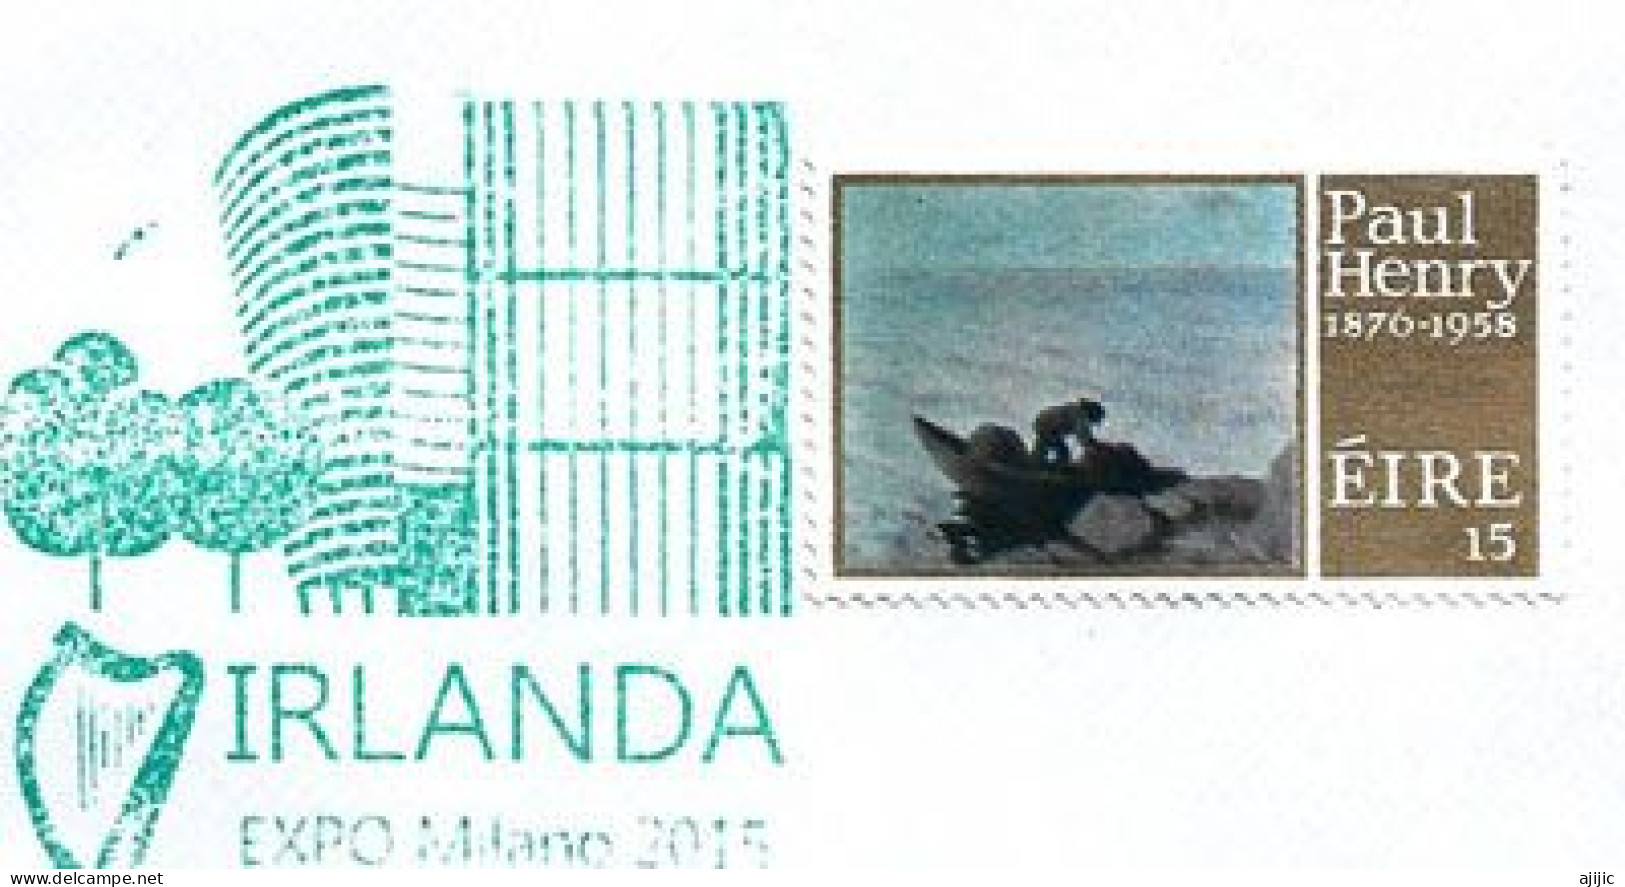 IRLAND / EIRE. EXPO UNIVERSELLE MILANO 2015., Lettre Avec Timbre Irlandais, Du Pavillon IRLANDE (rare) - Briefe U. Dokumente